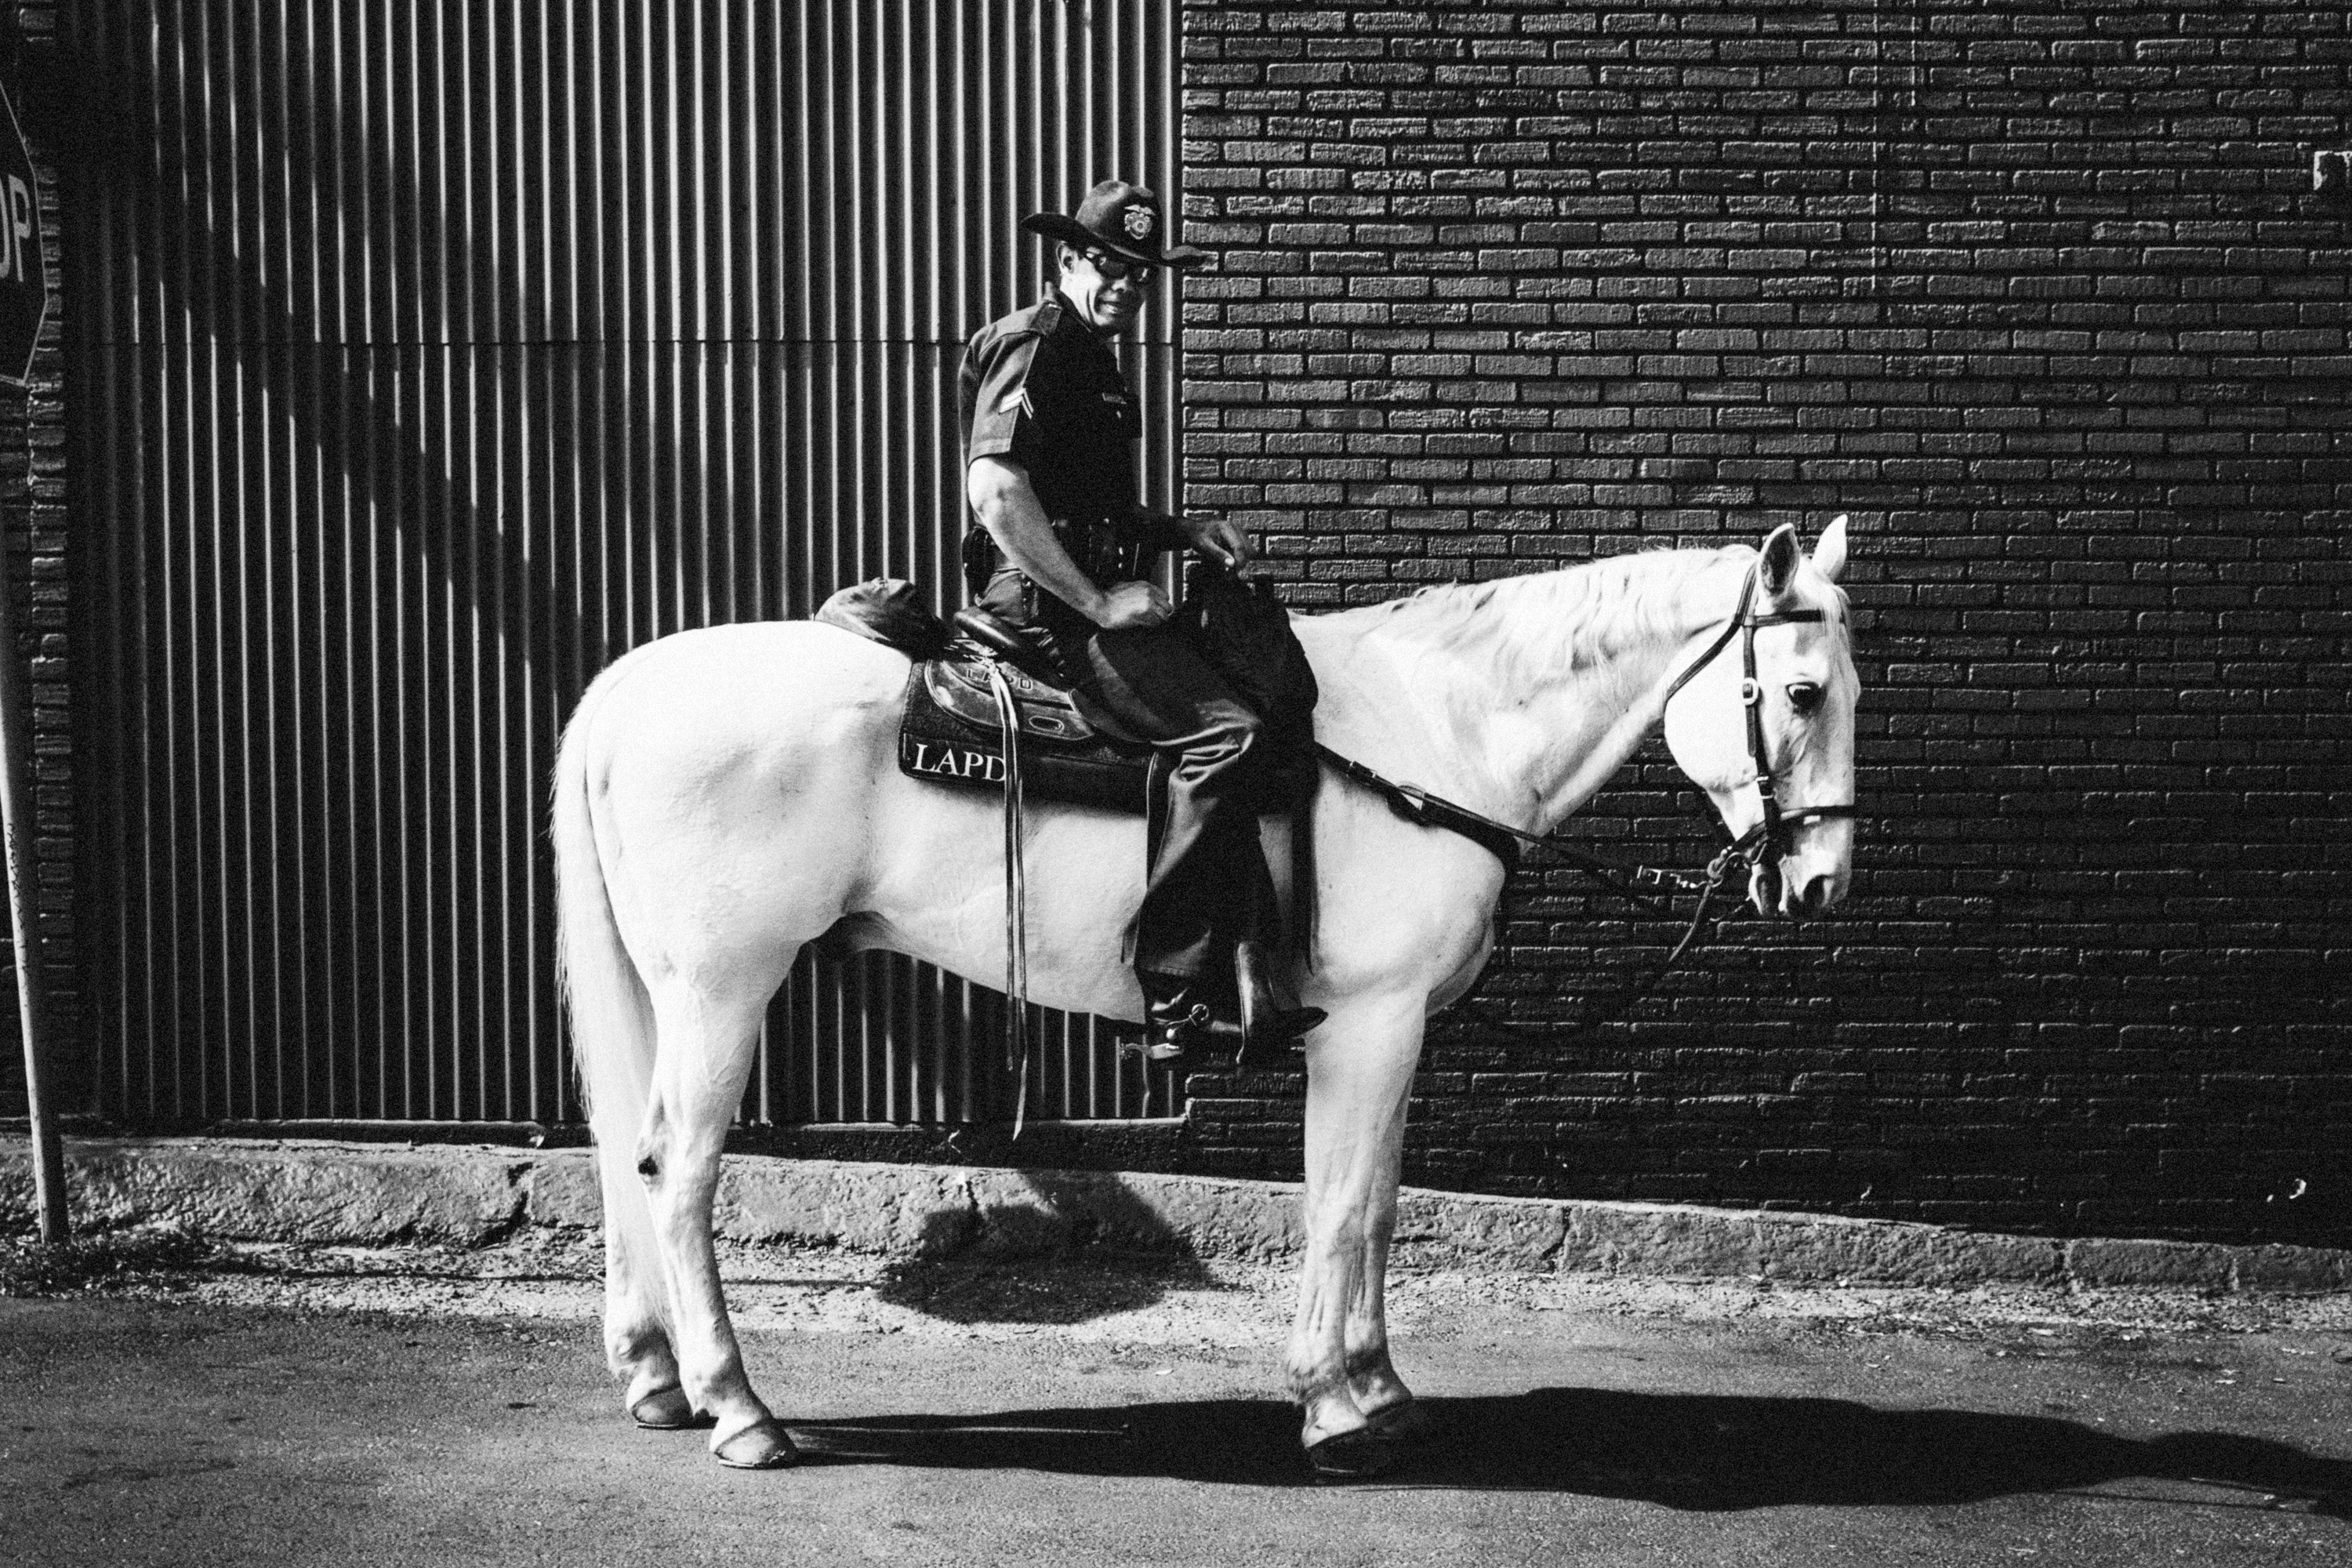 Cop on a horse - photography Owen Tozer